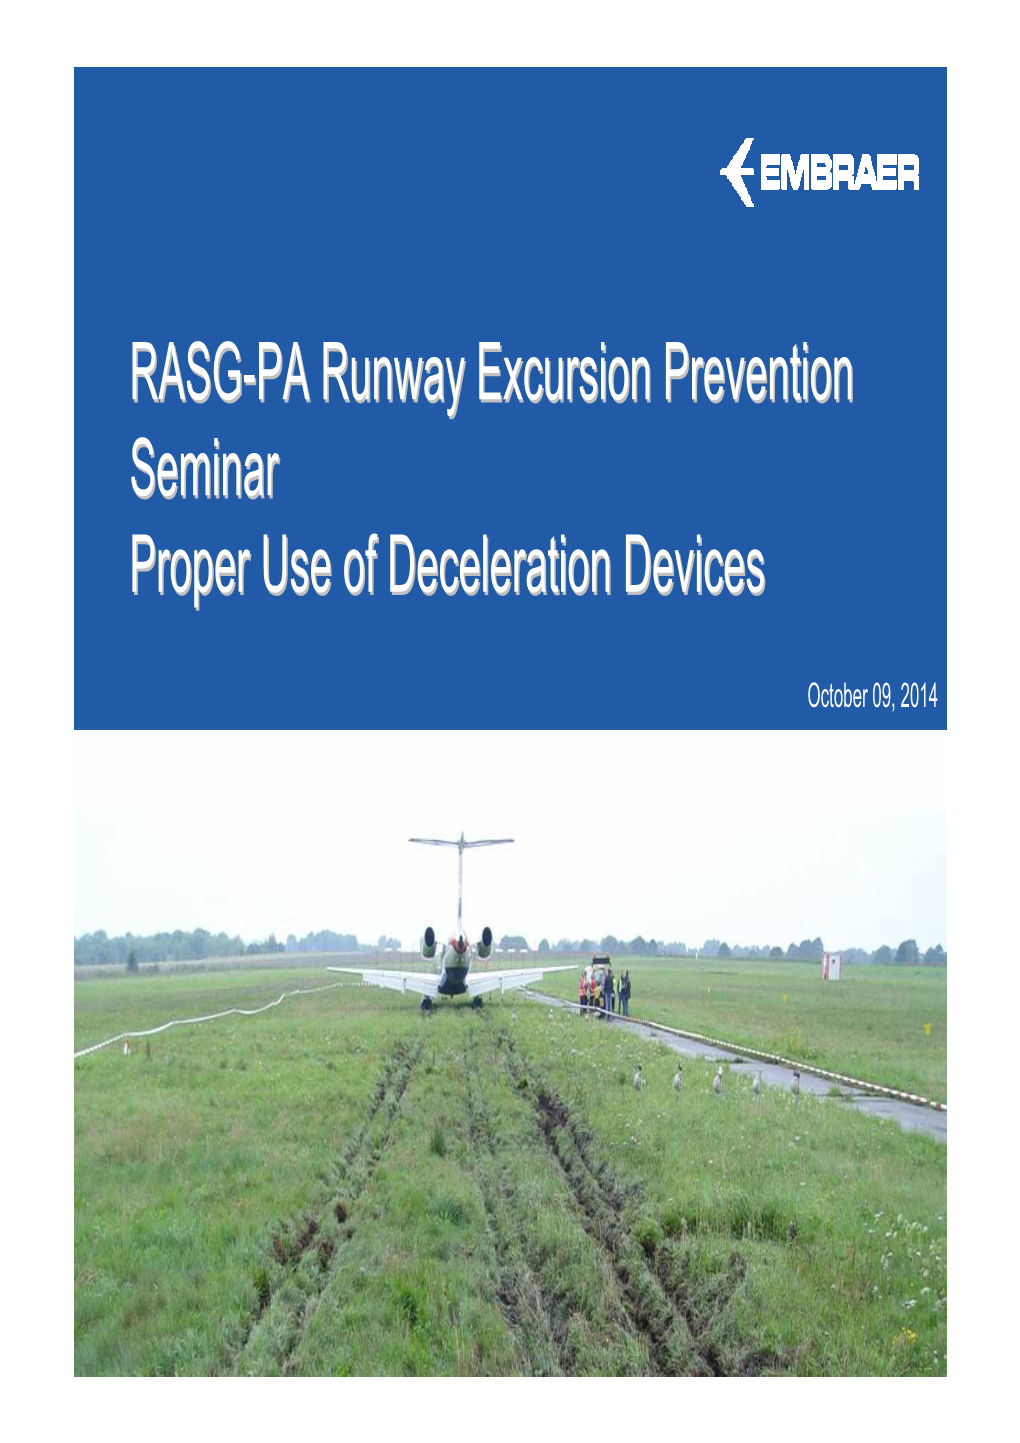 RASG-PA RE Prevention Seminar